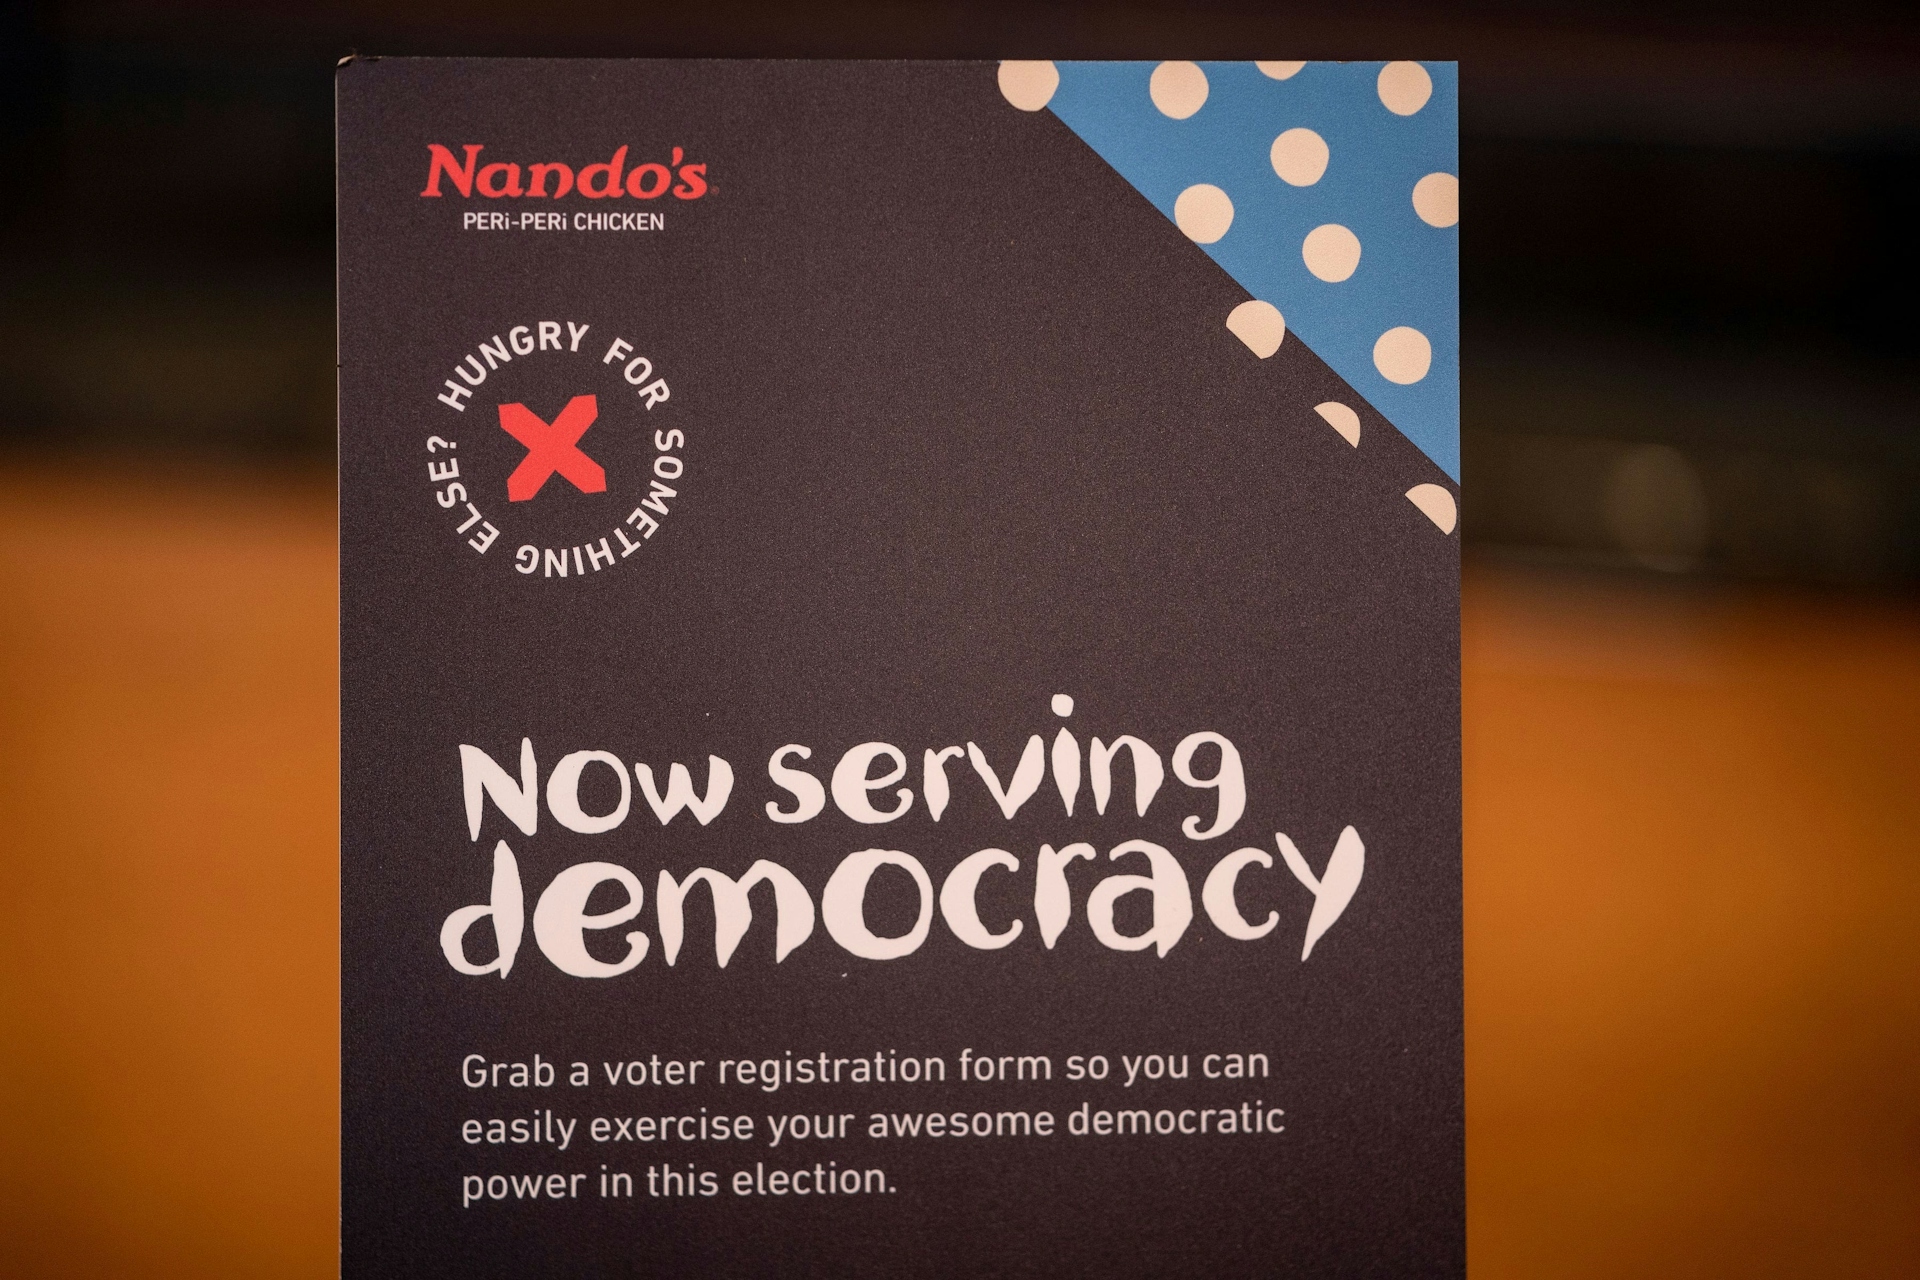 Nando's Puts Voter Registration on the Menu